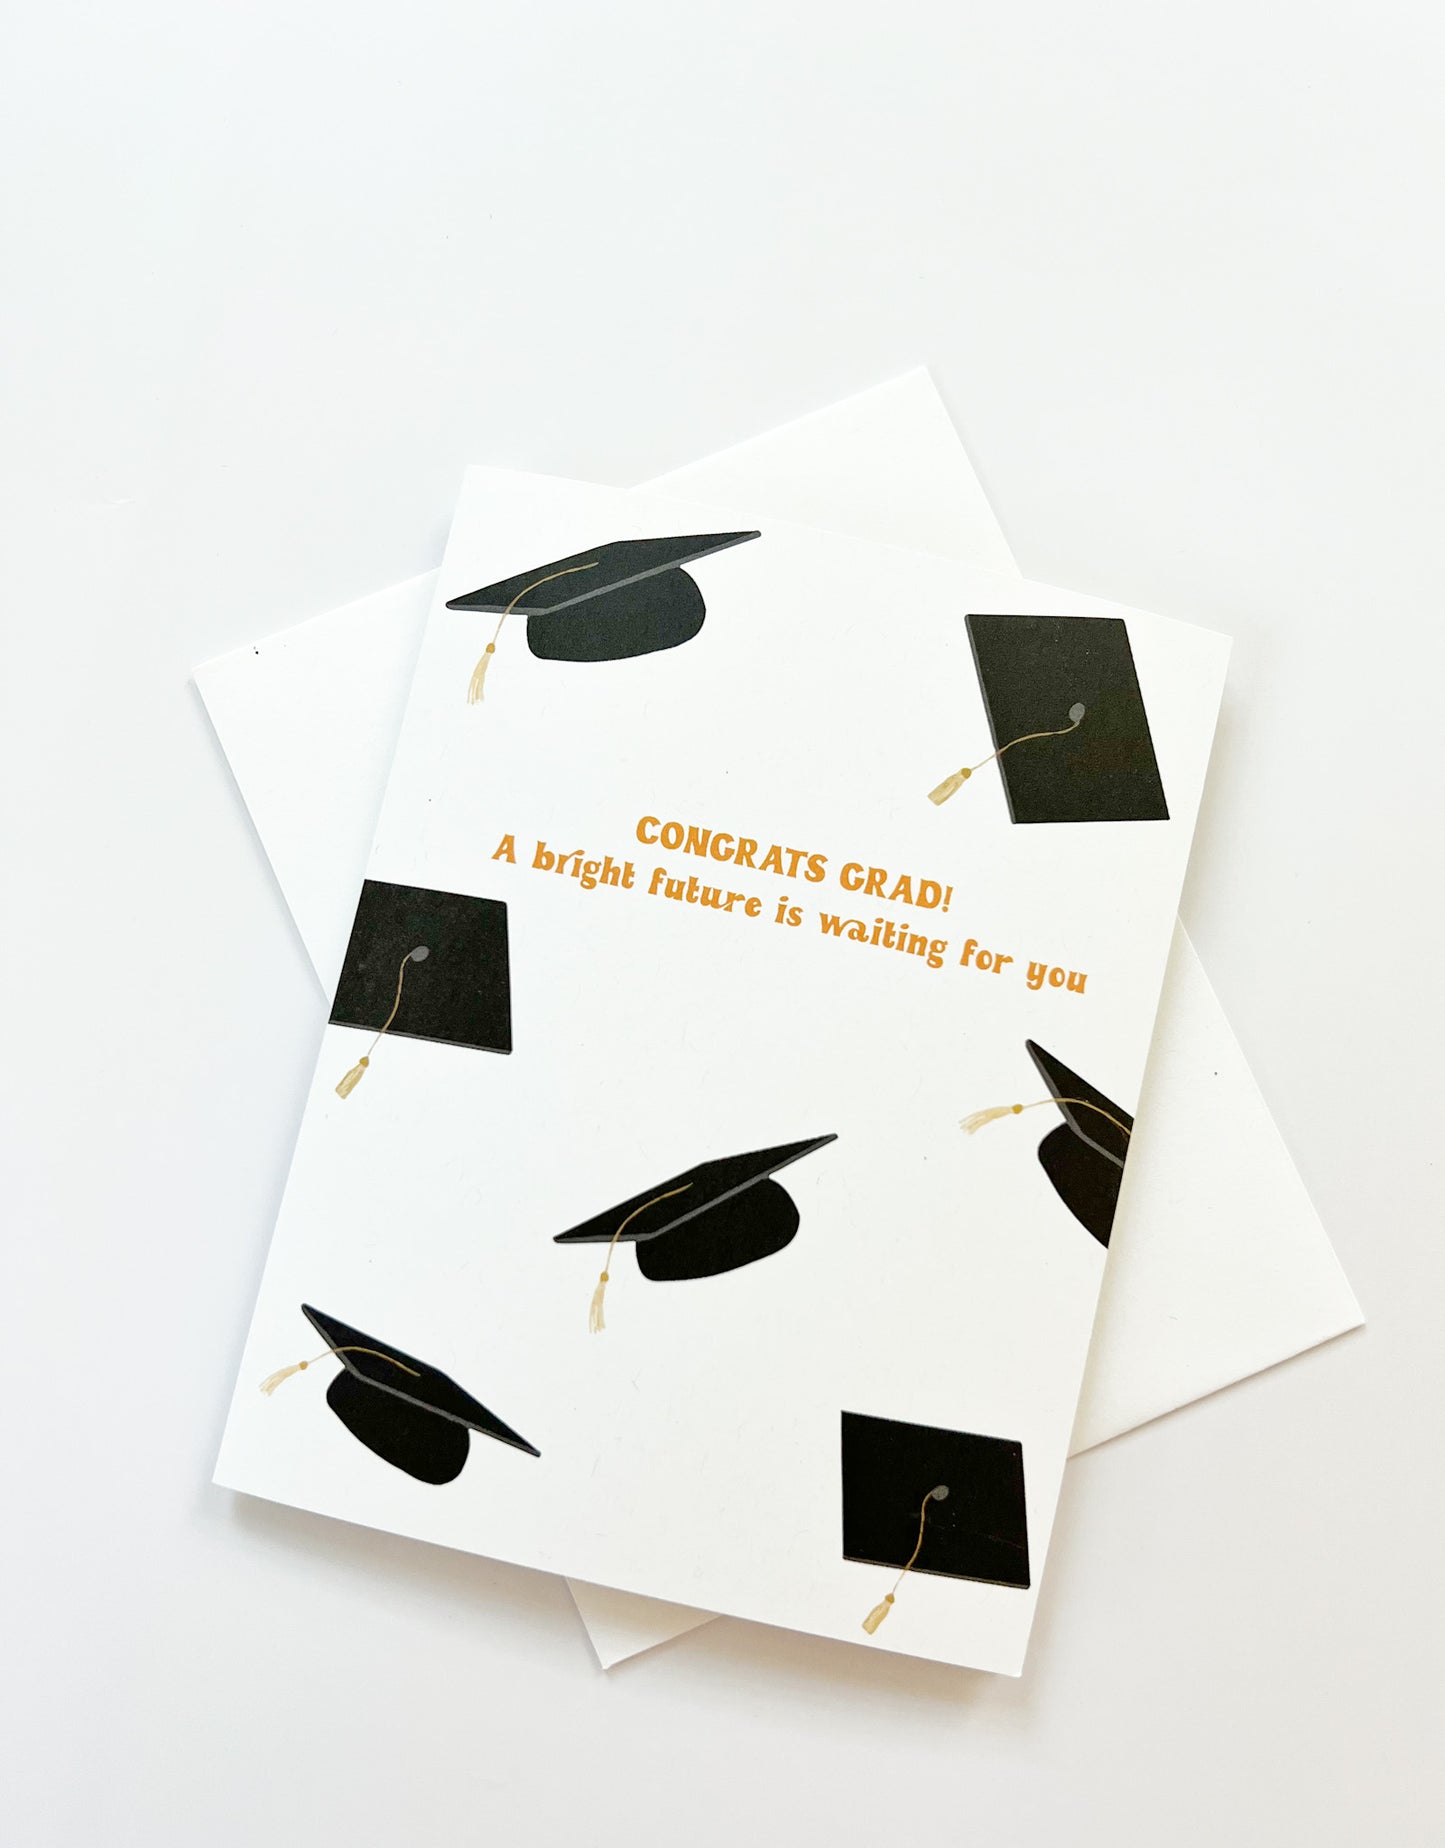 Happy Graduation Card with Graduation Cap